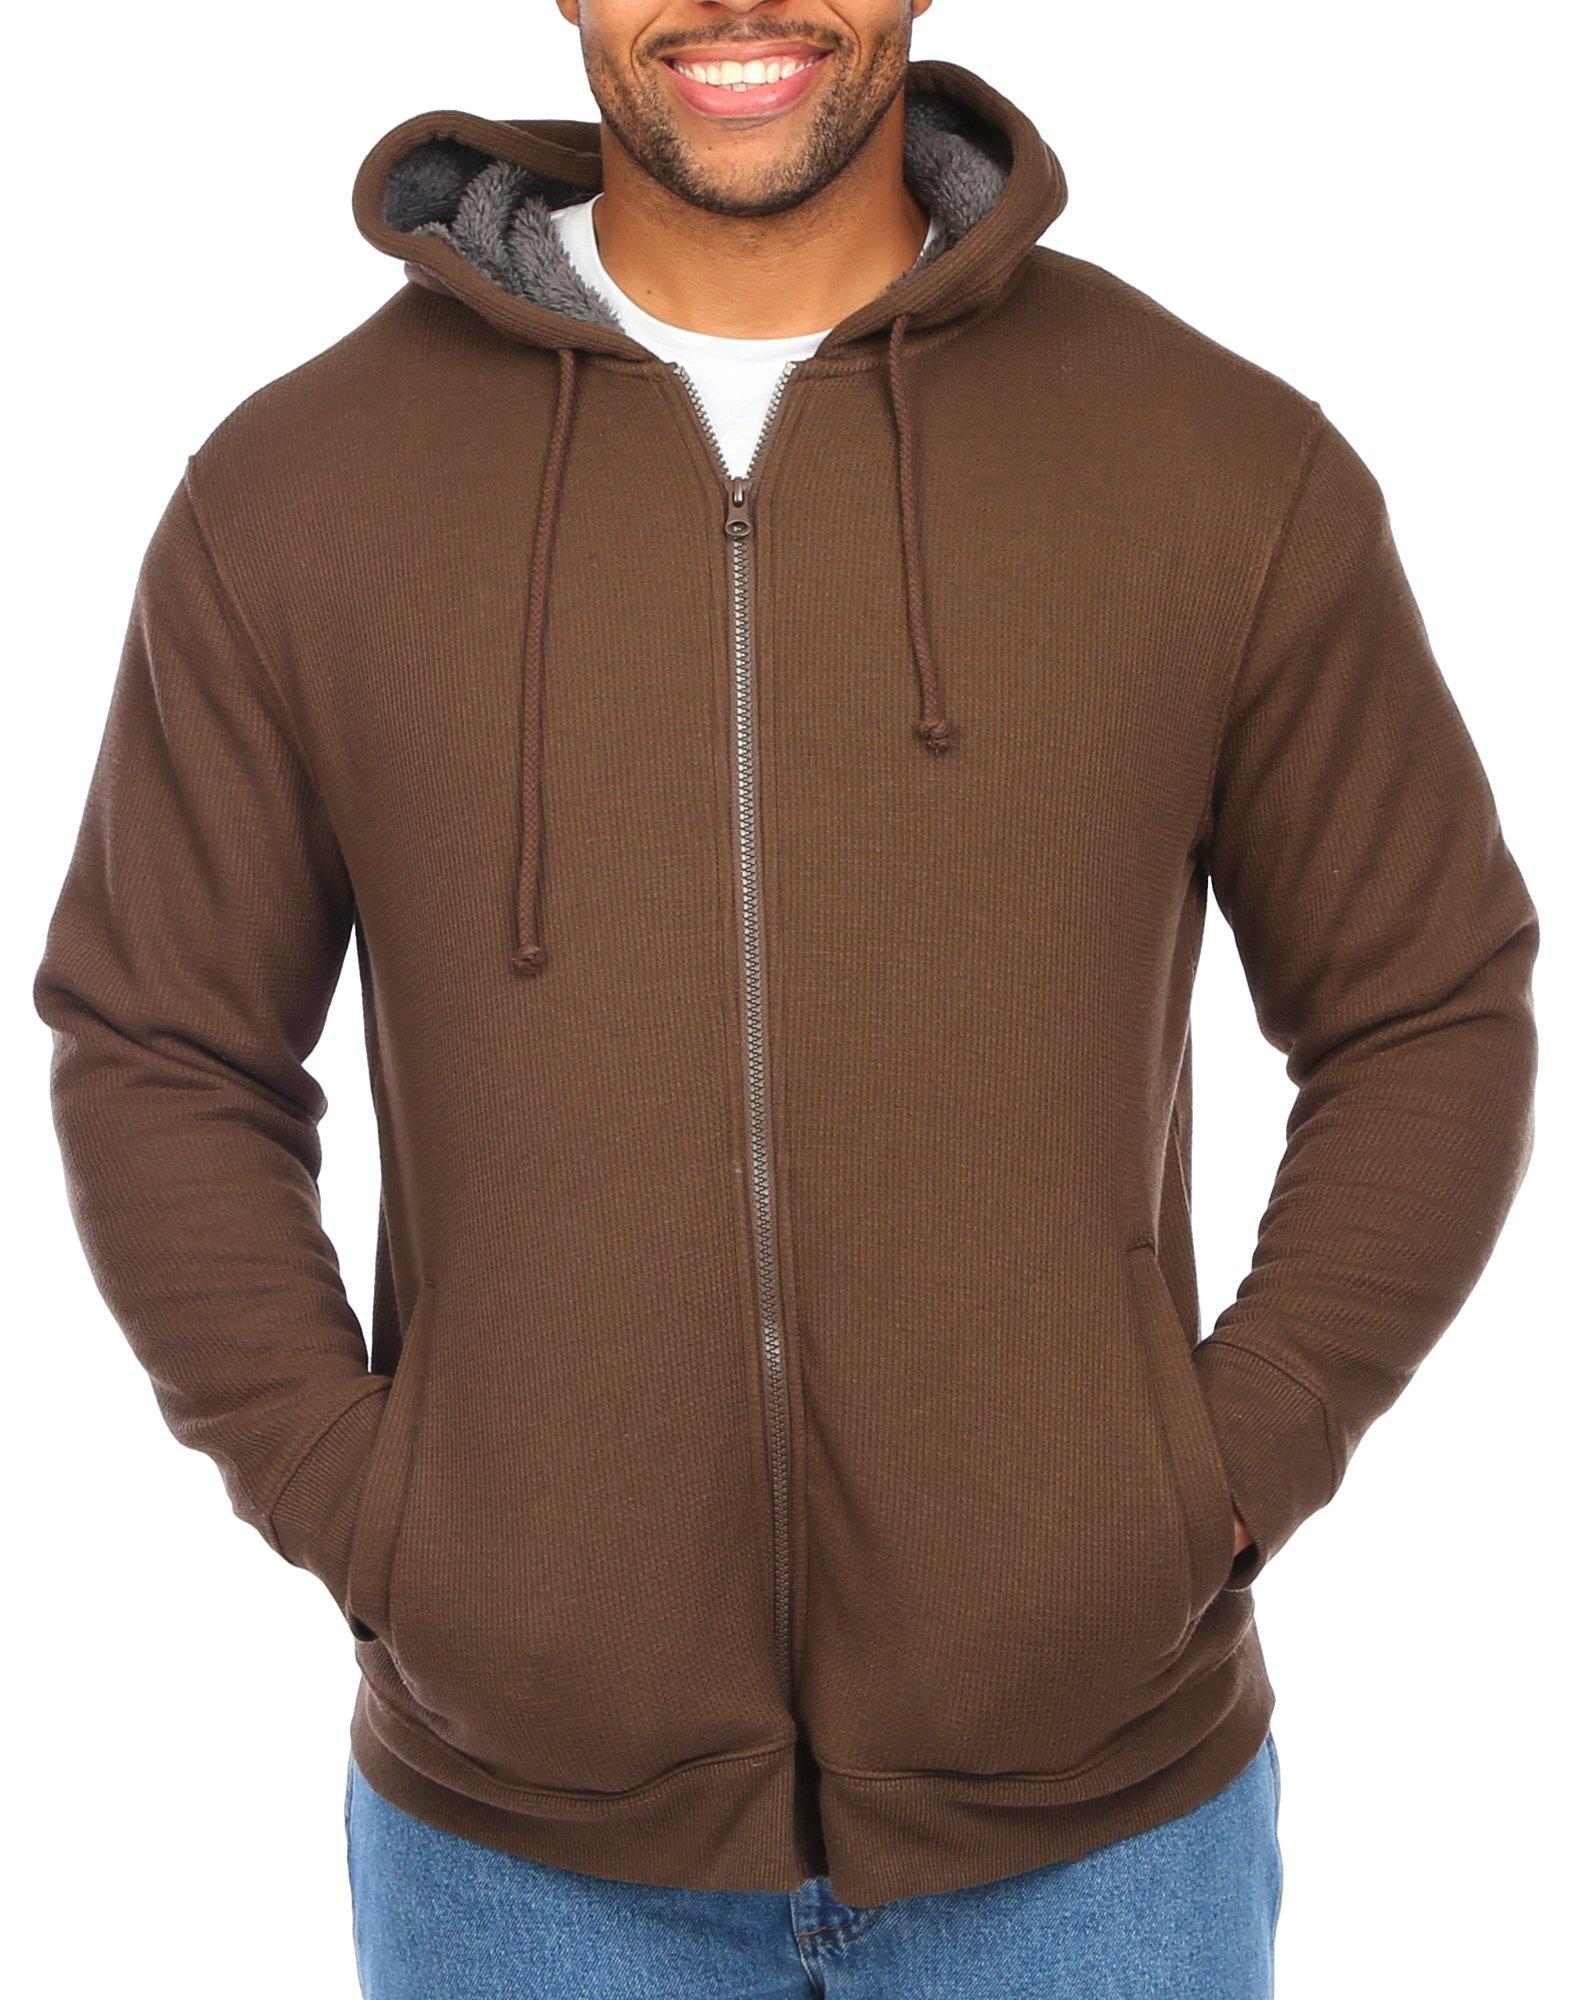 Men's Thermal & Fleece Full Zip Hoodie - Brown